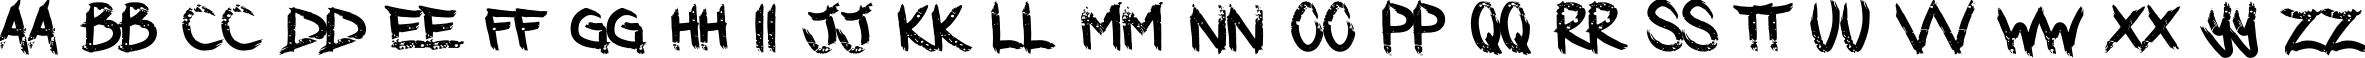 Пример написания английского алфавита шрифтом Dark Waters Regular